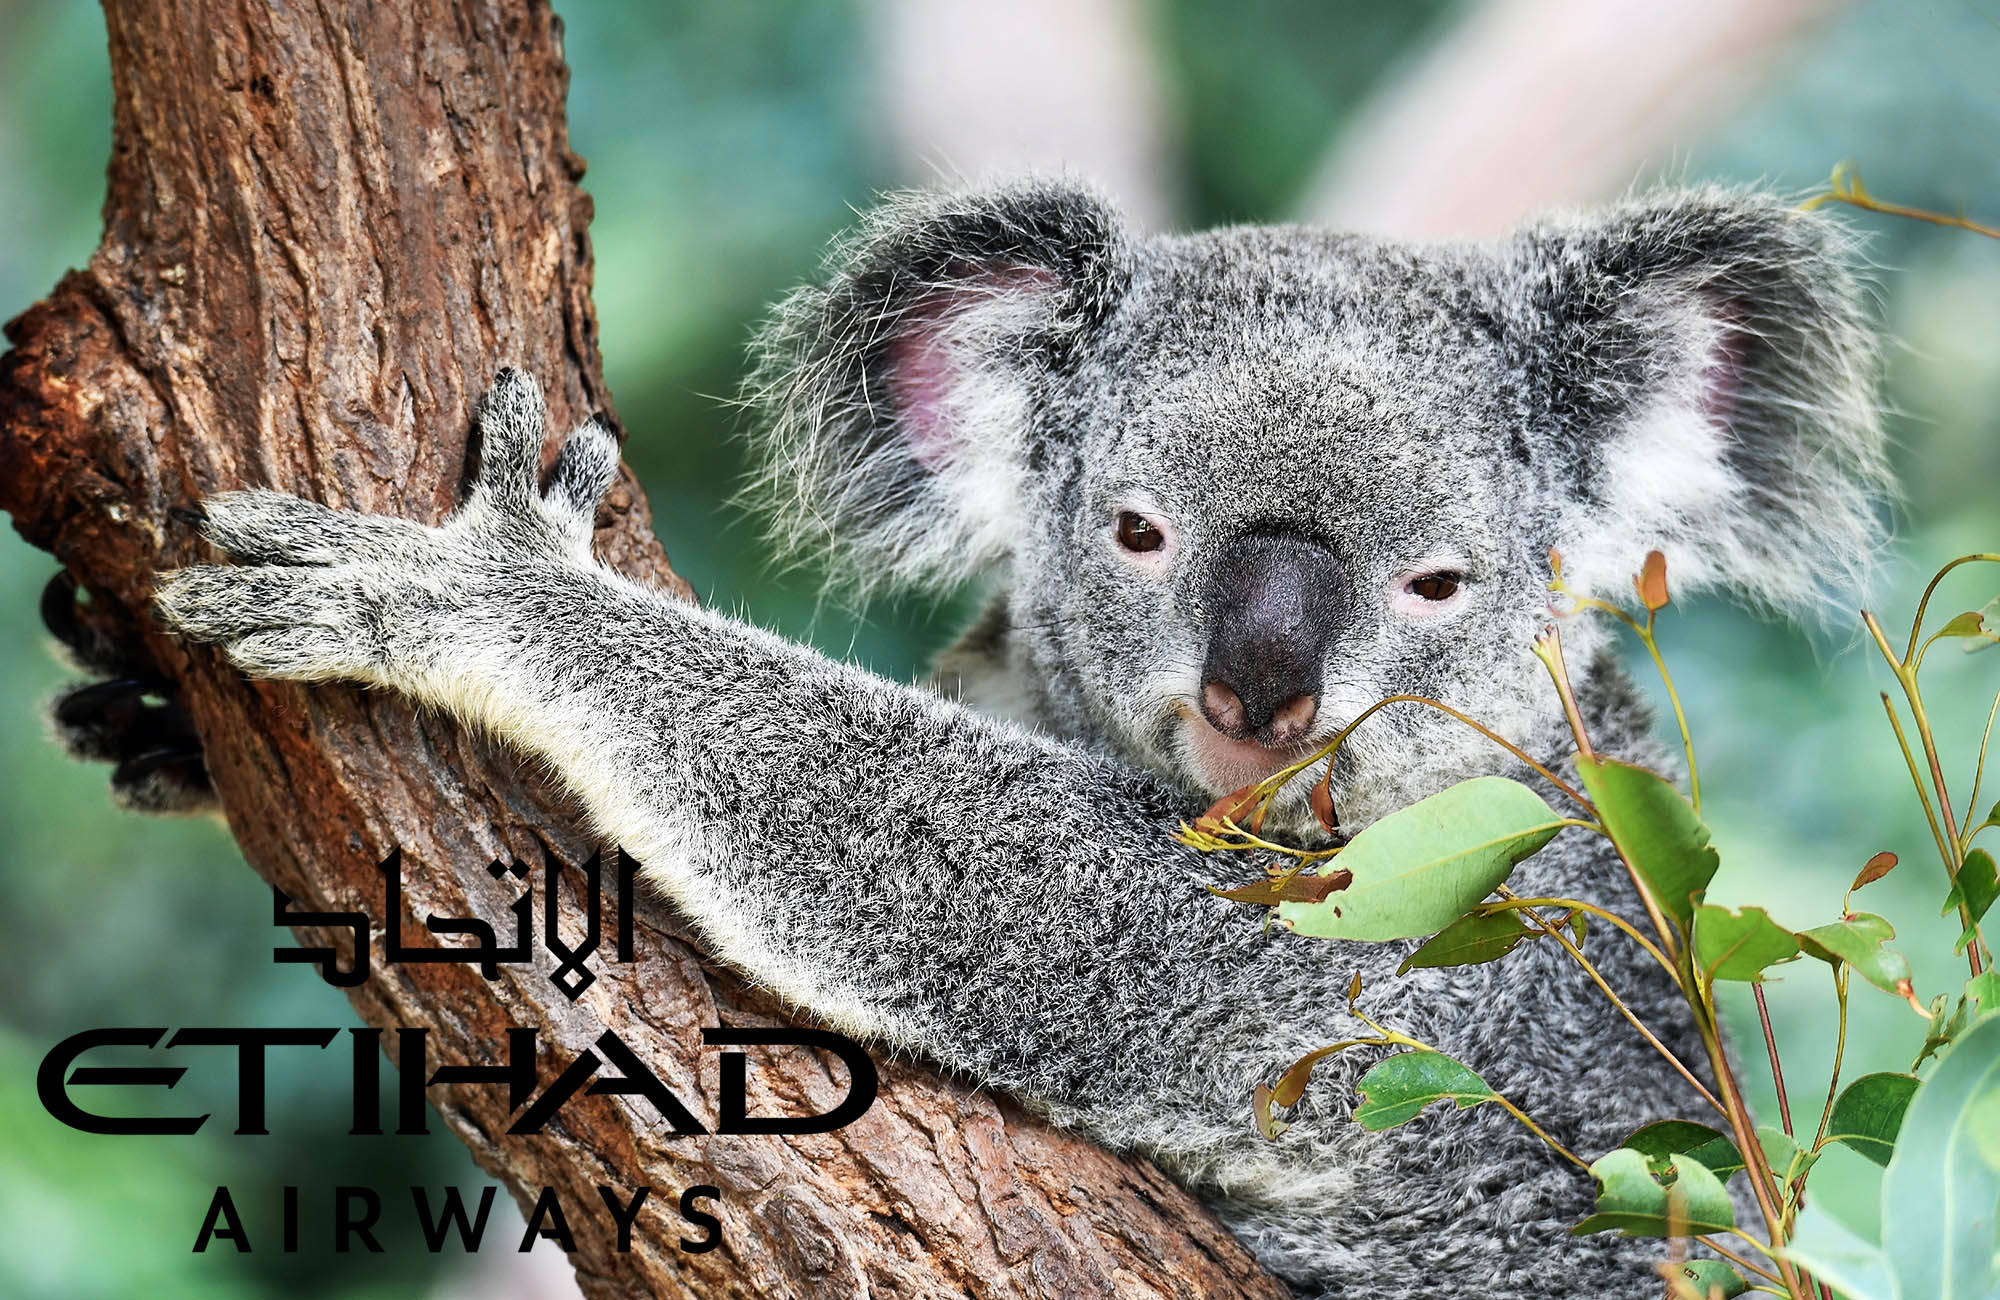 etihad-airways-australia-koala